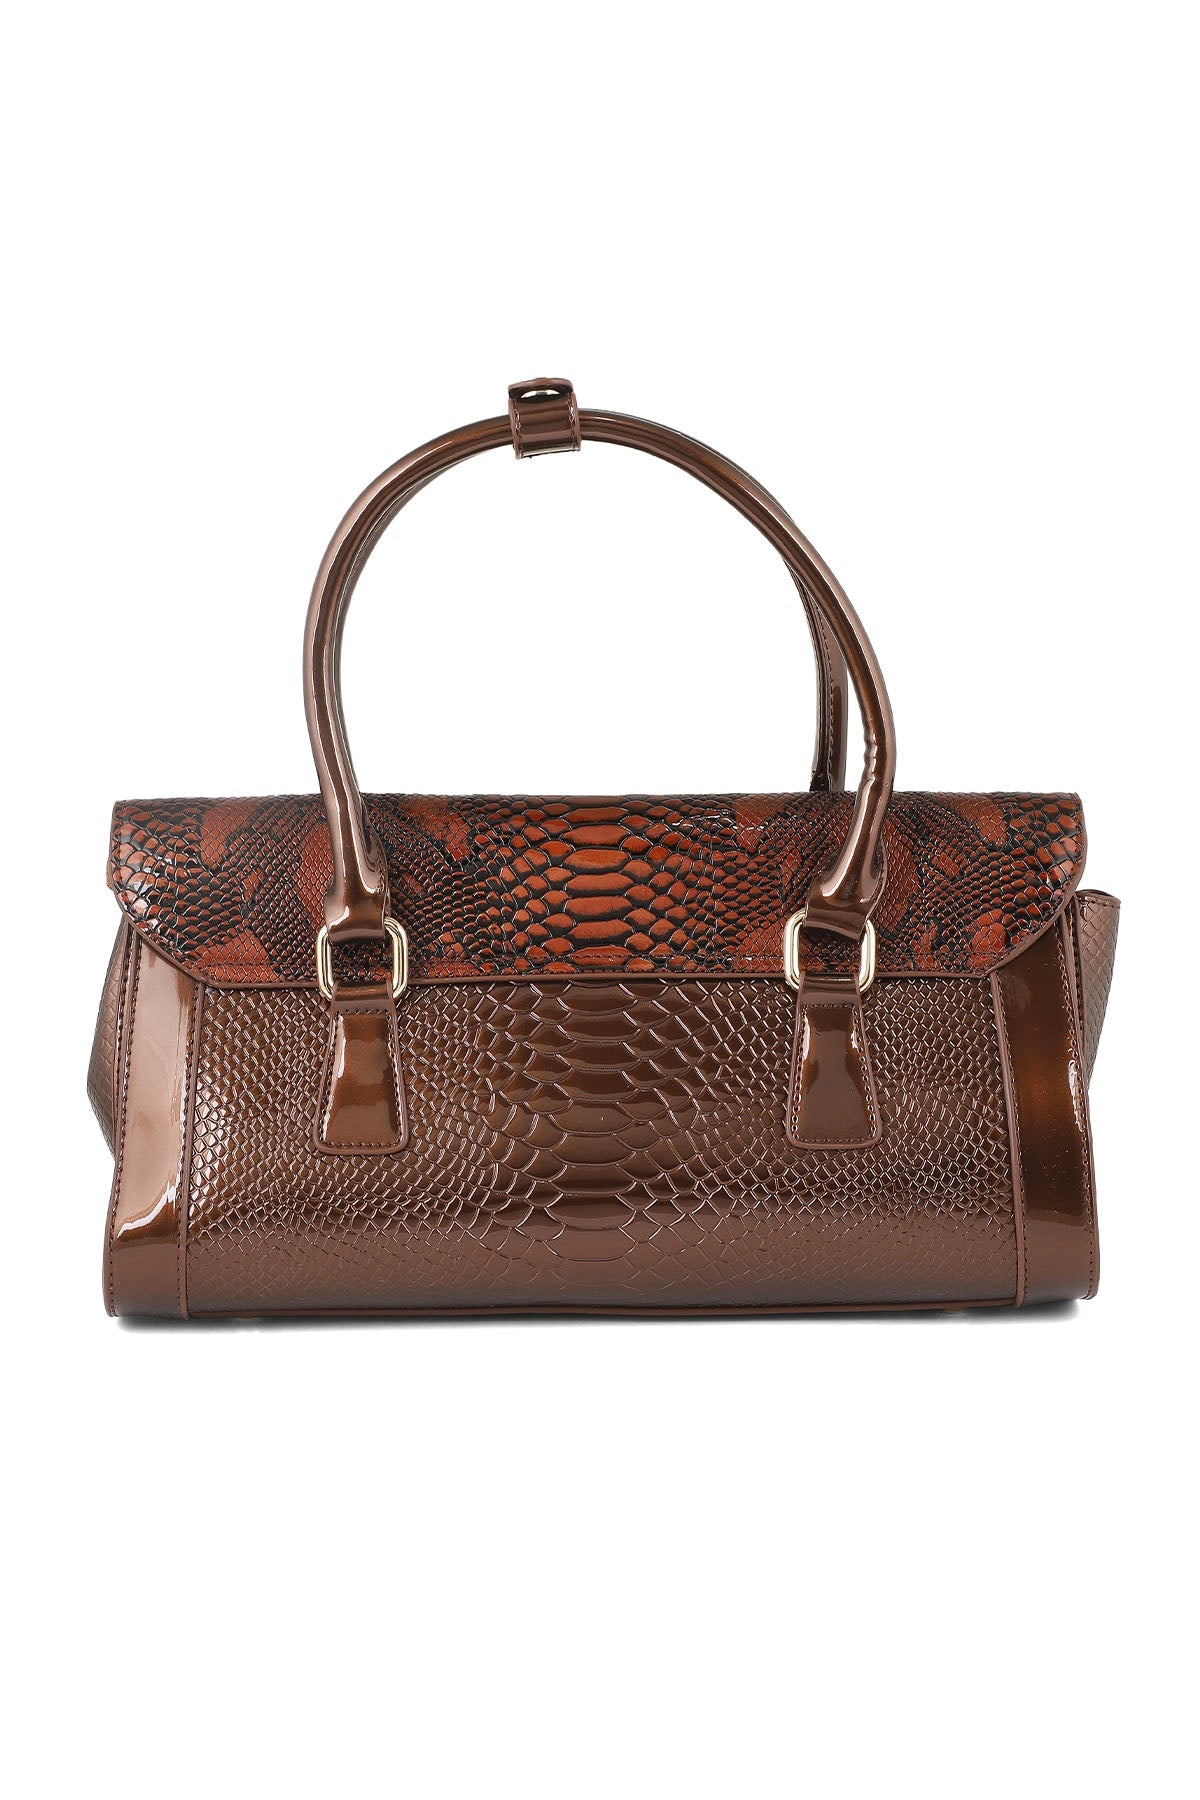 Top Handle Hand Bags B14998-Brown